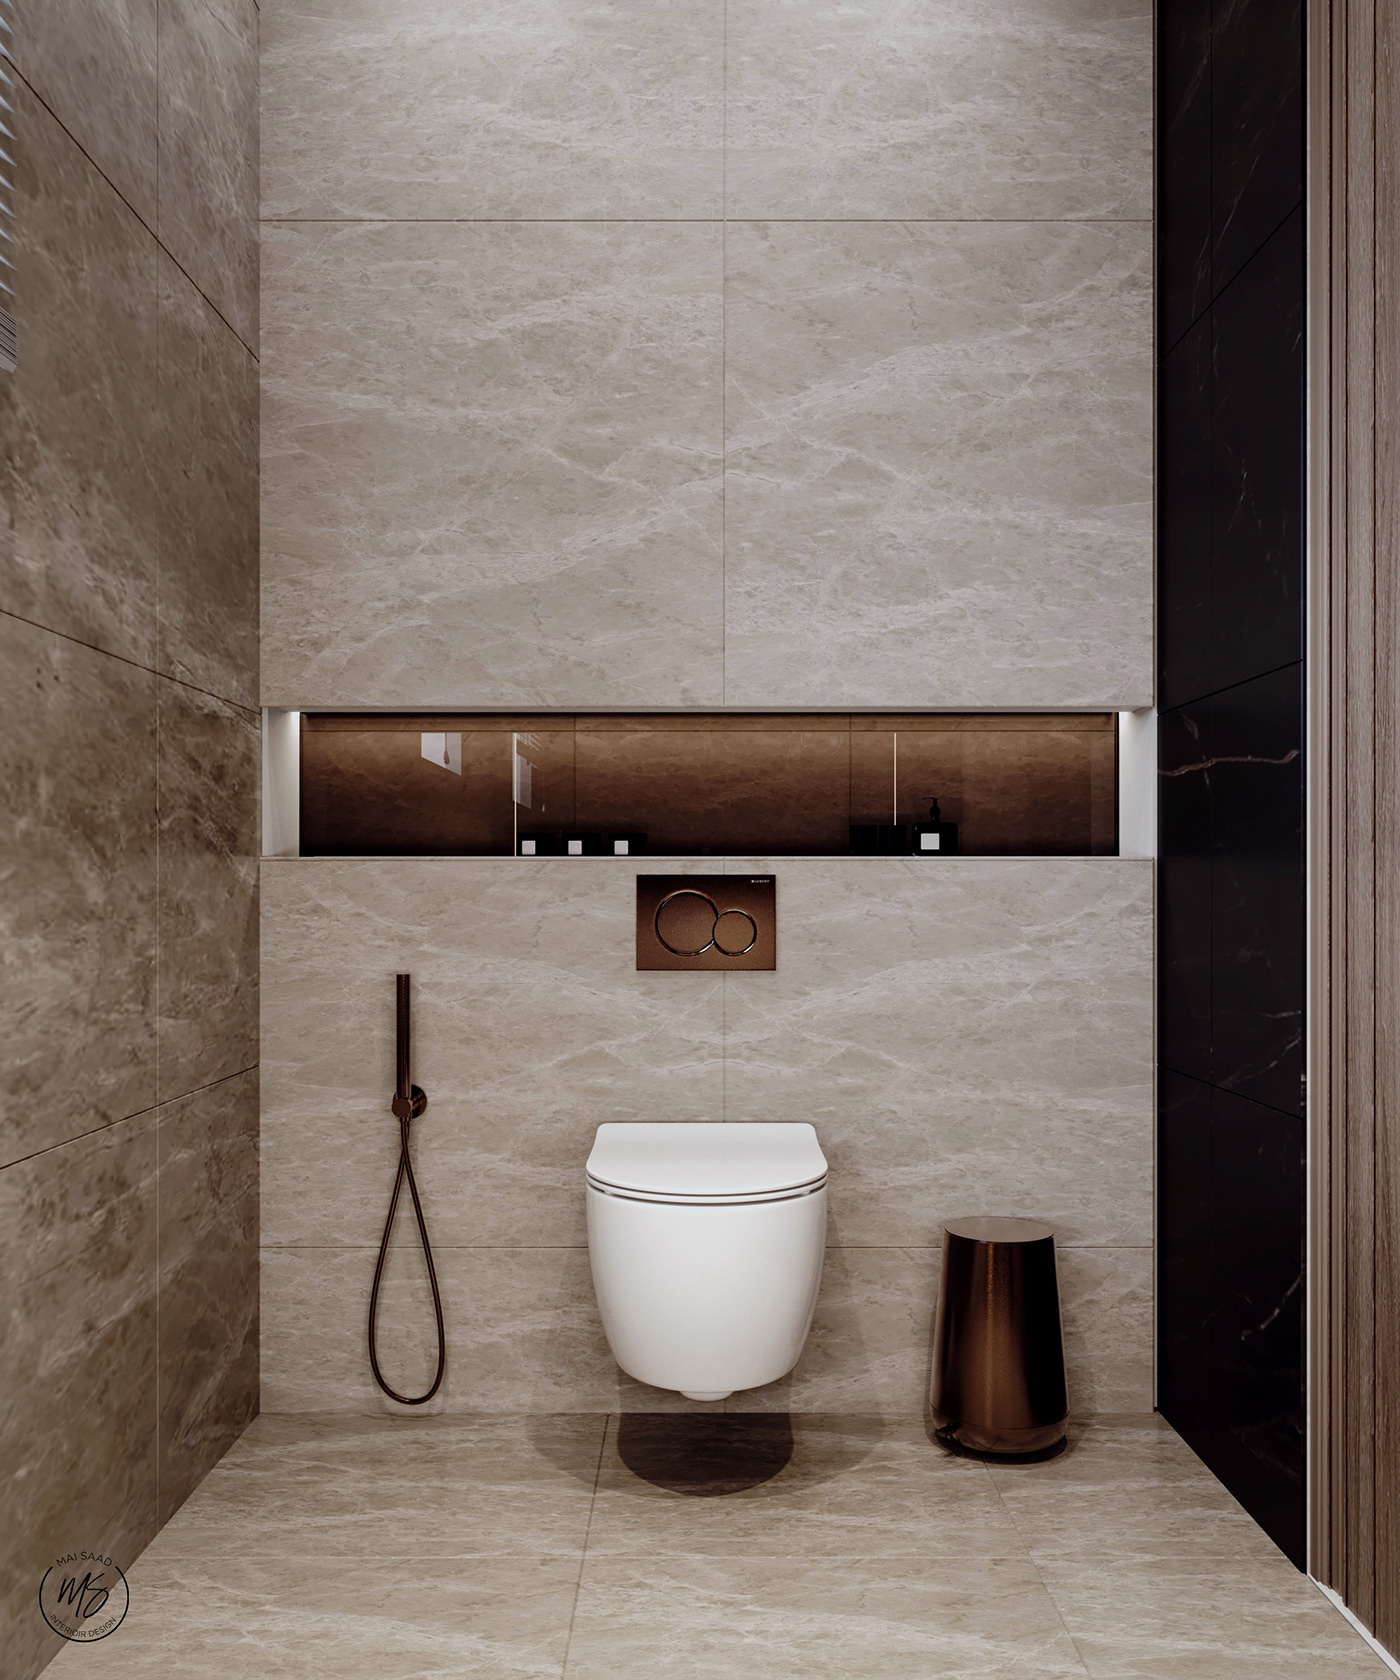 luxury powder room interior design  Luxury Design bocadolobo guest bathroom powder room design